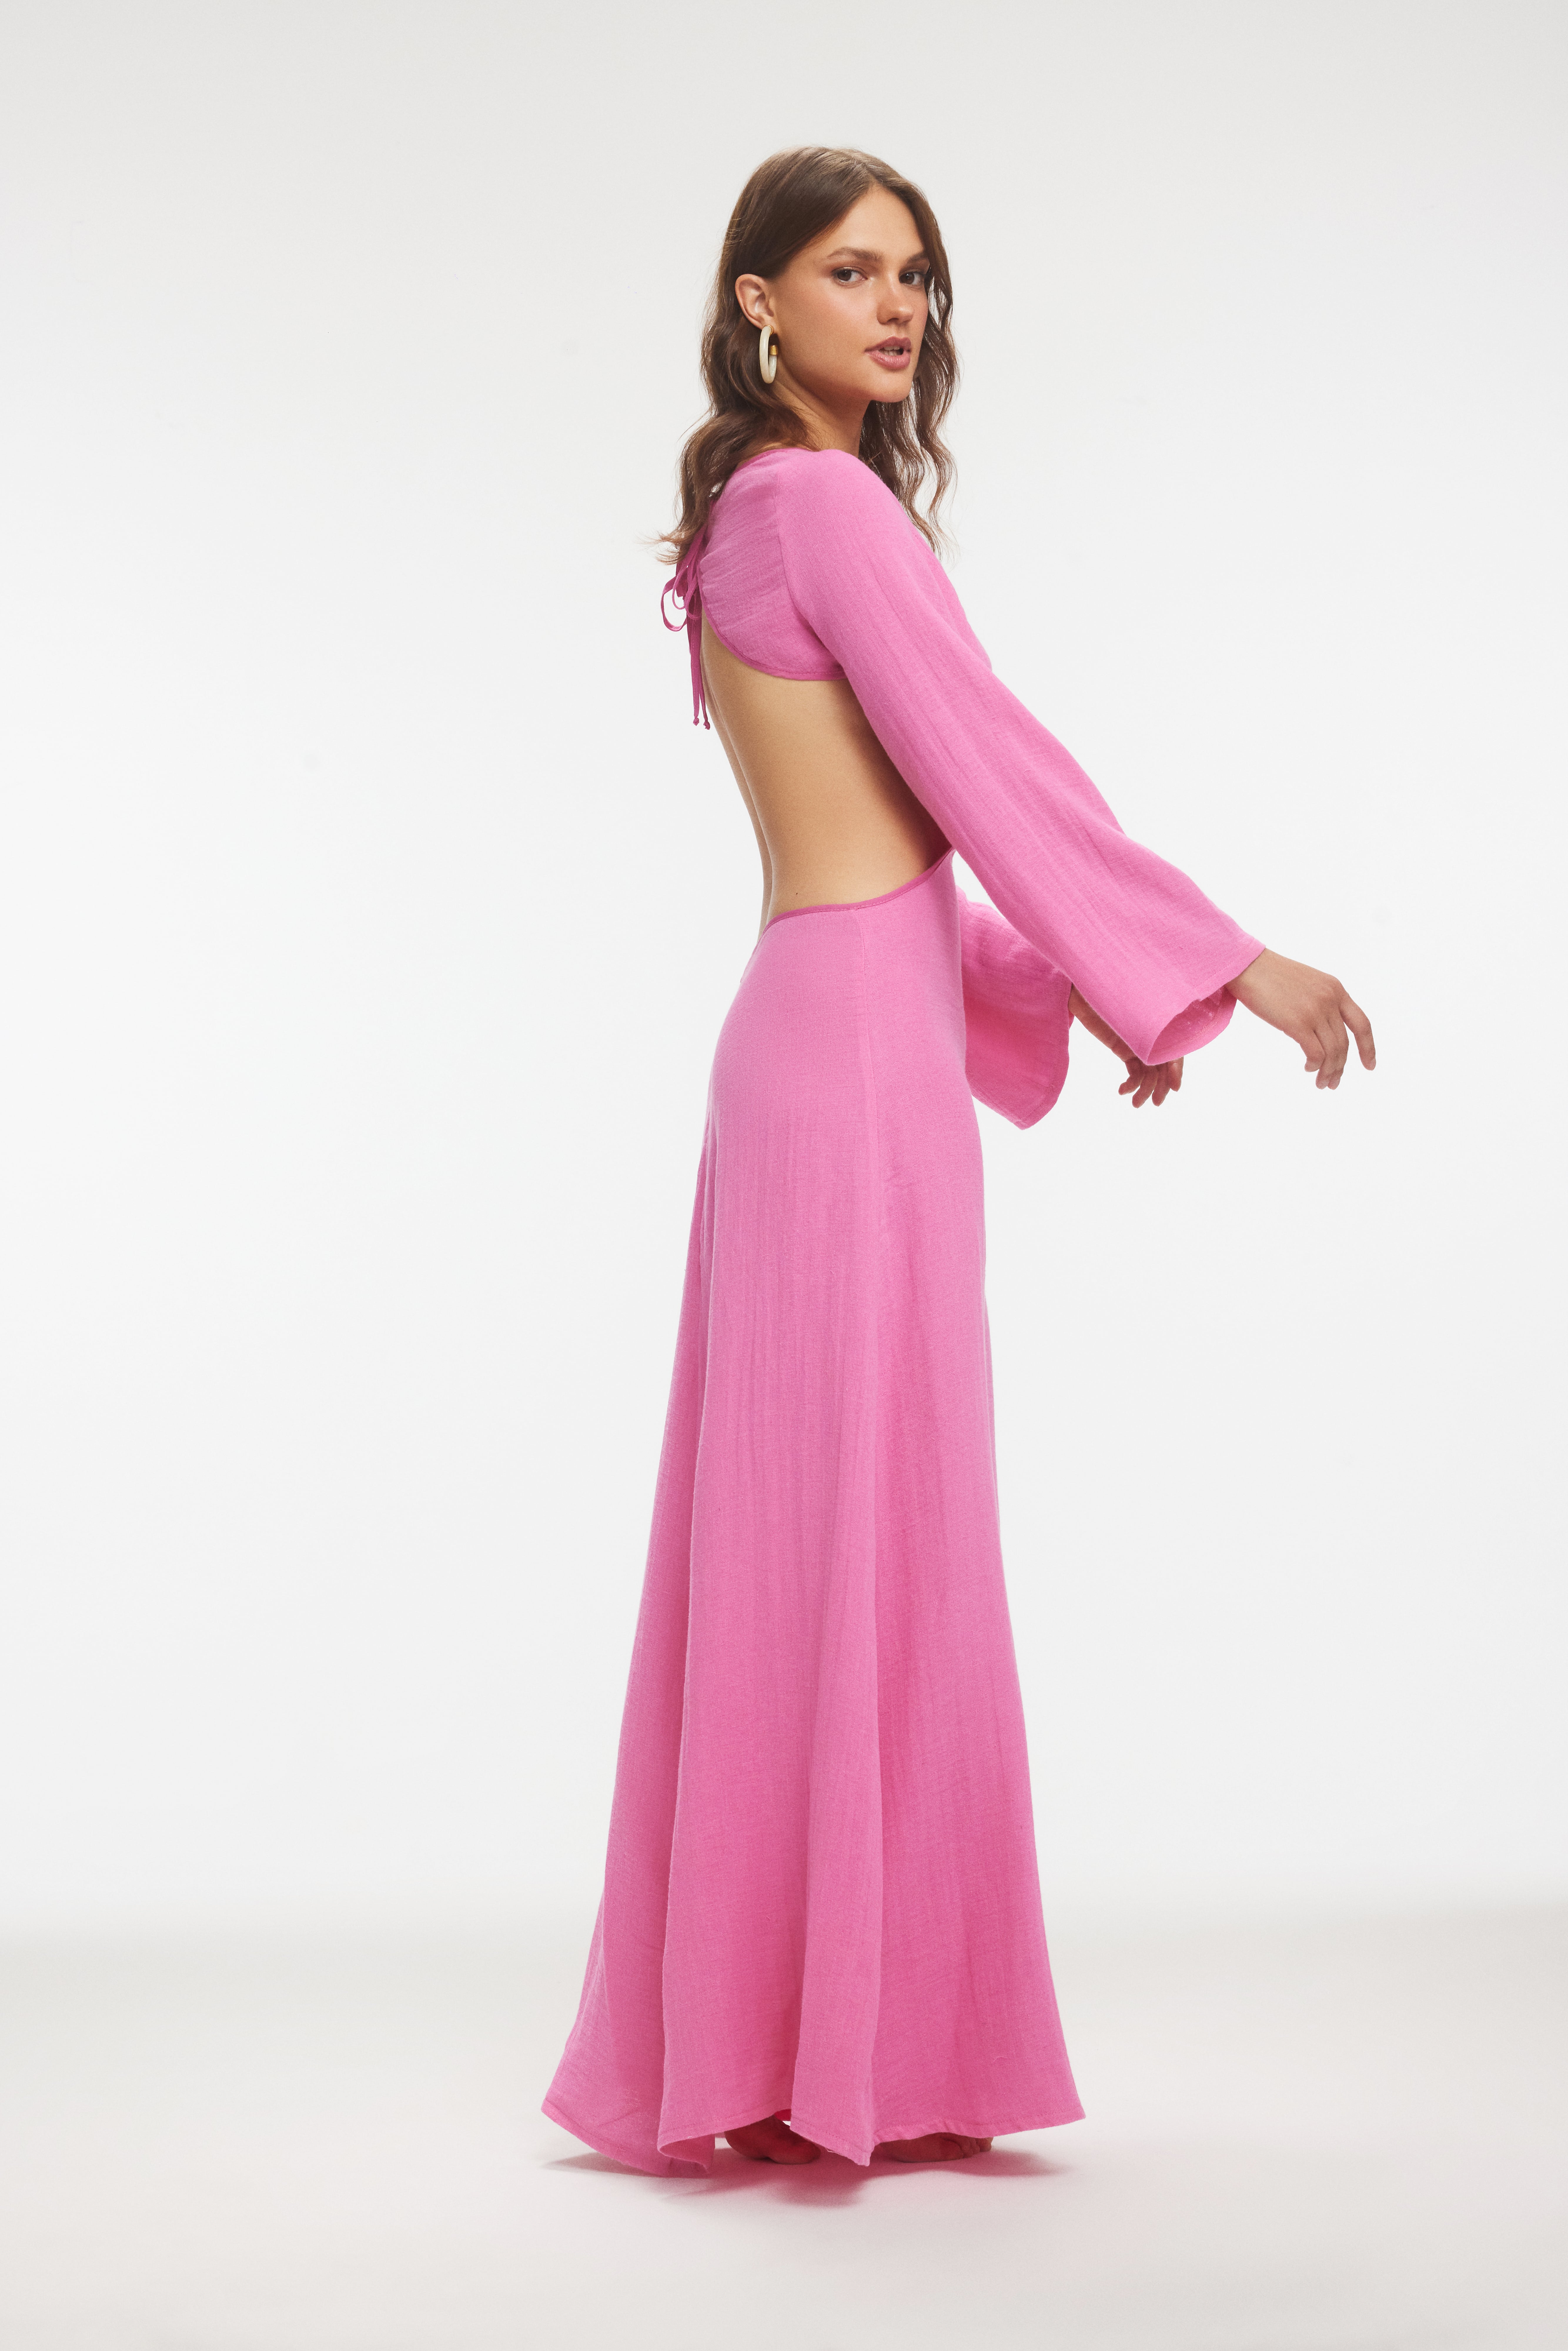  KAYE Low Back Pink Maxi Dress